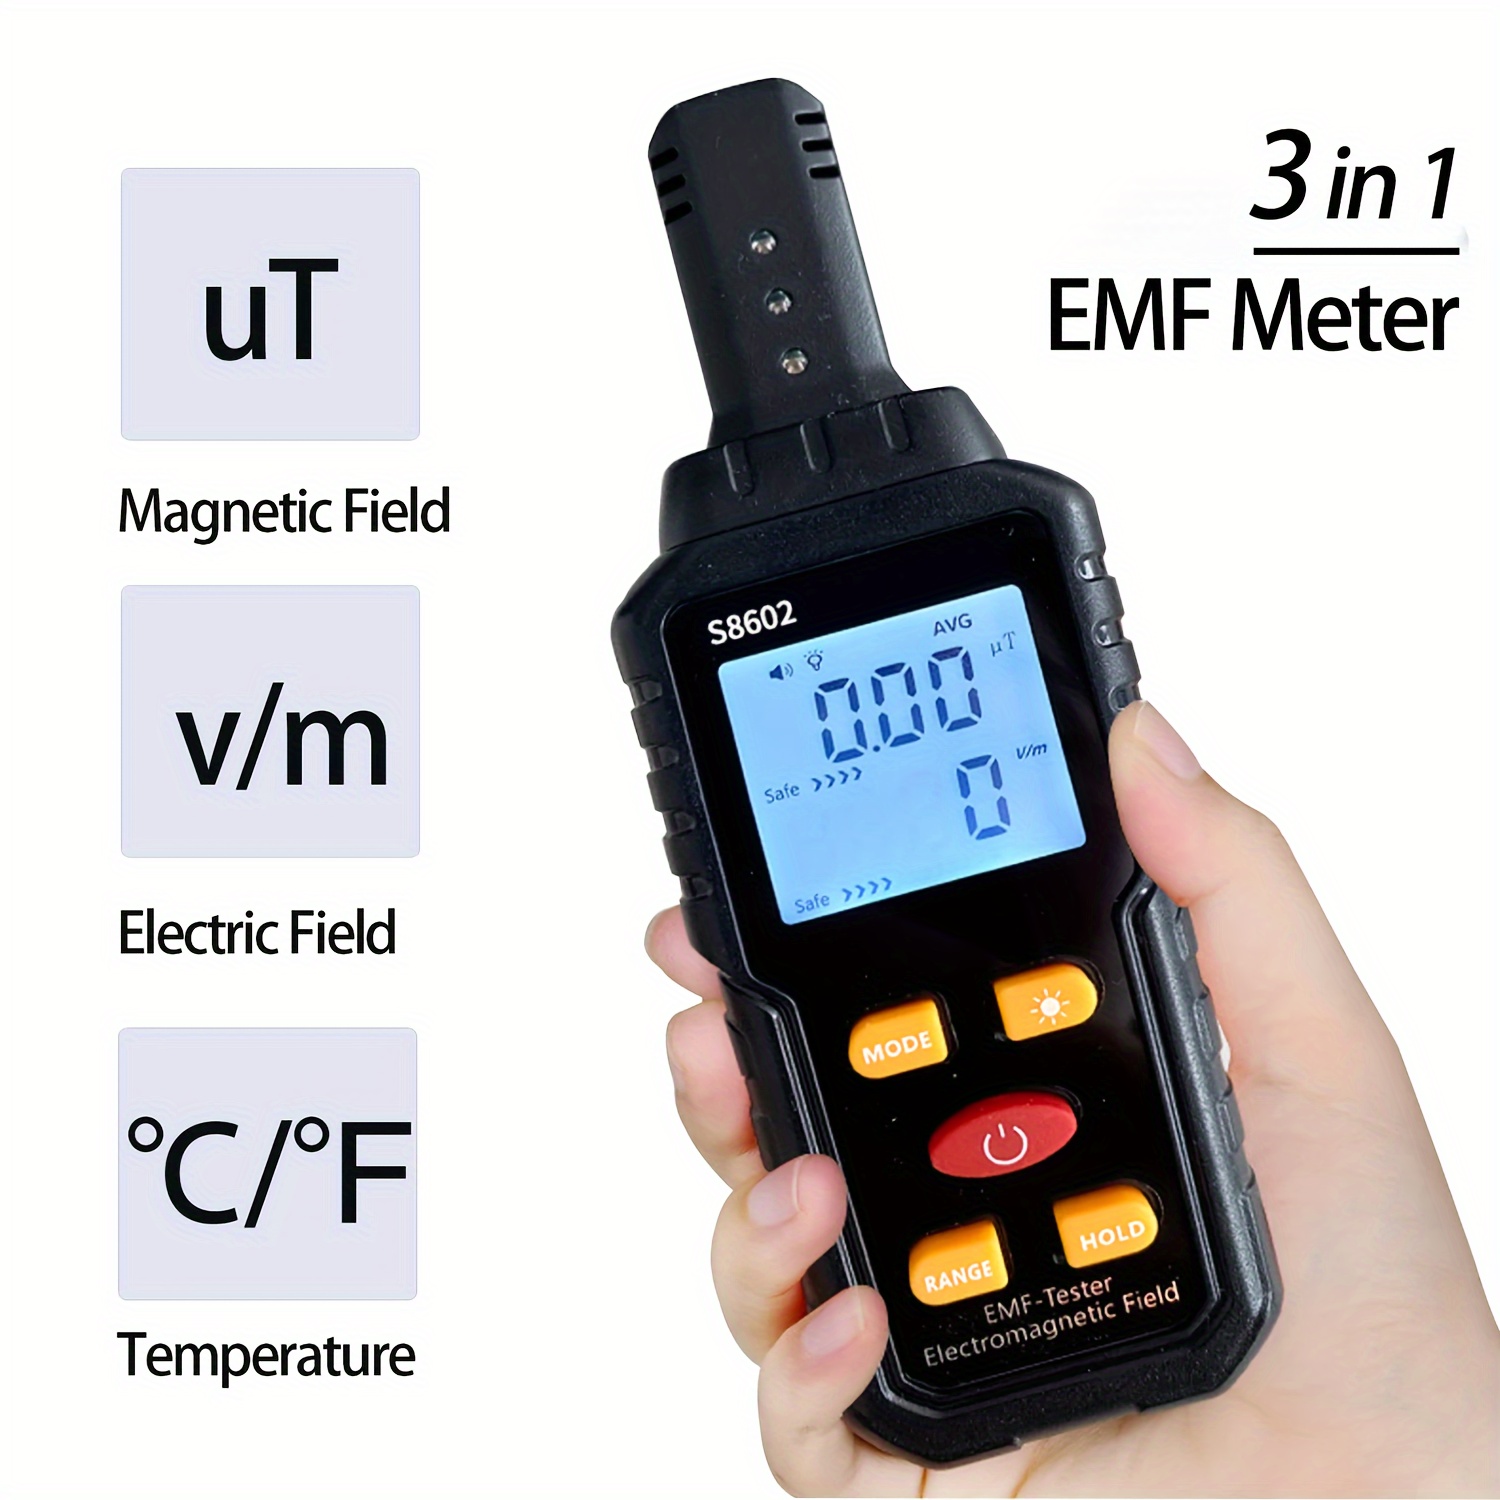 Detector De Radiación Electromagnética Medidor de radiación digital Medidor  de radiación electromagnética portátil útil para el hogar